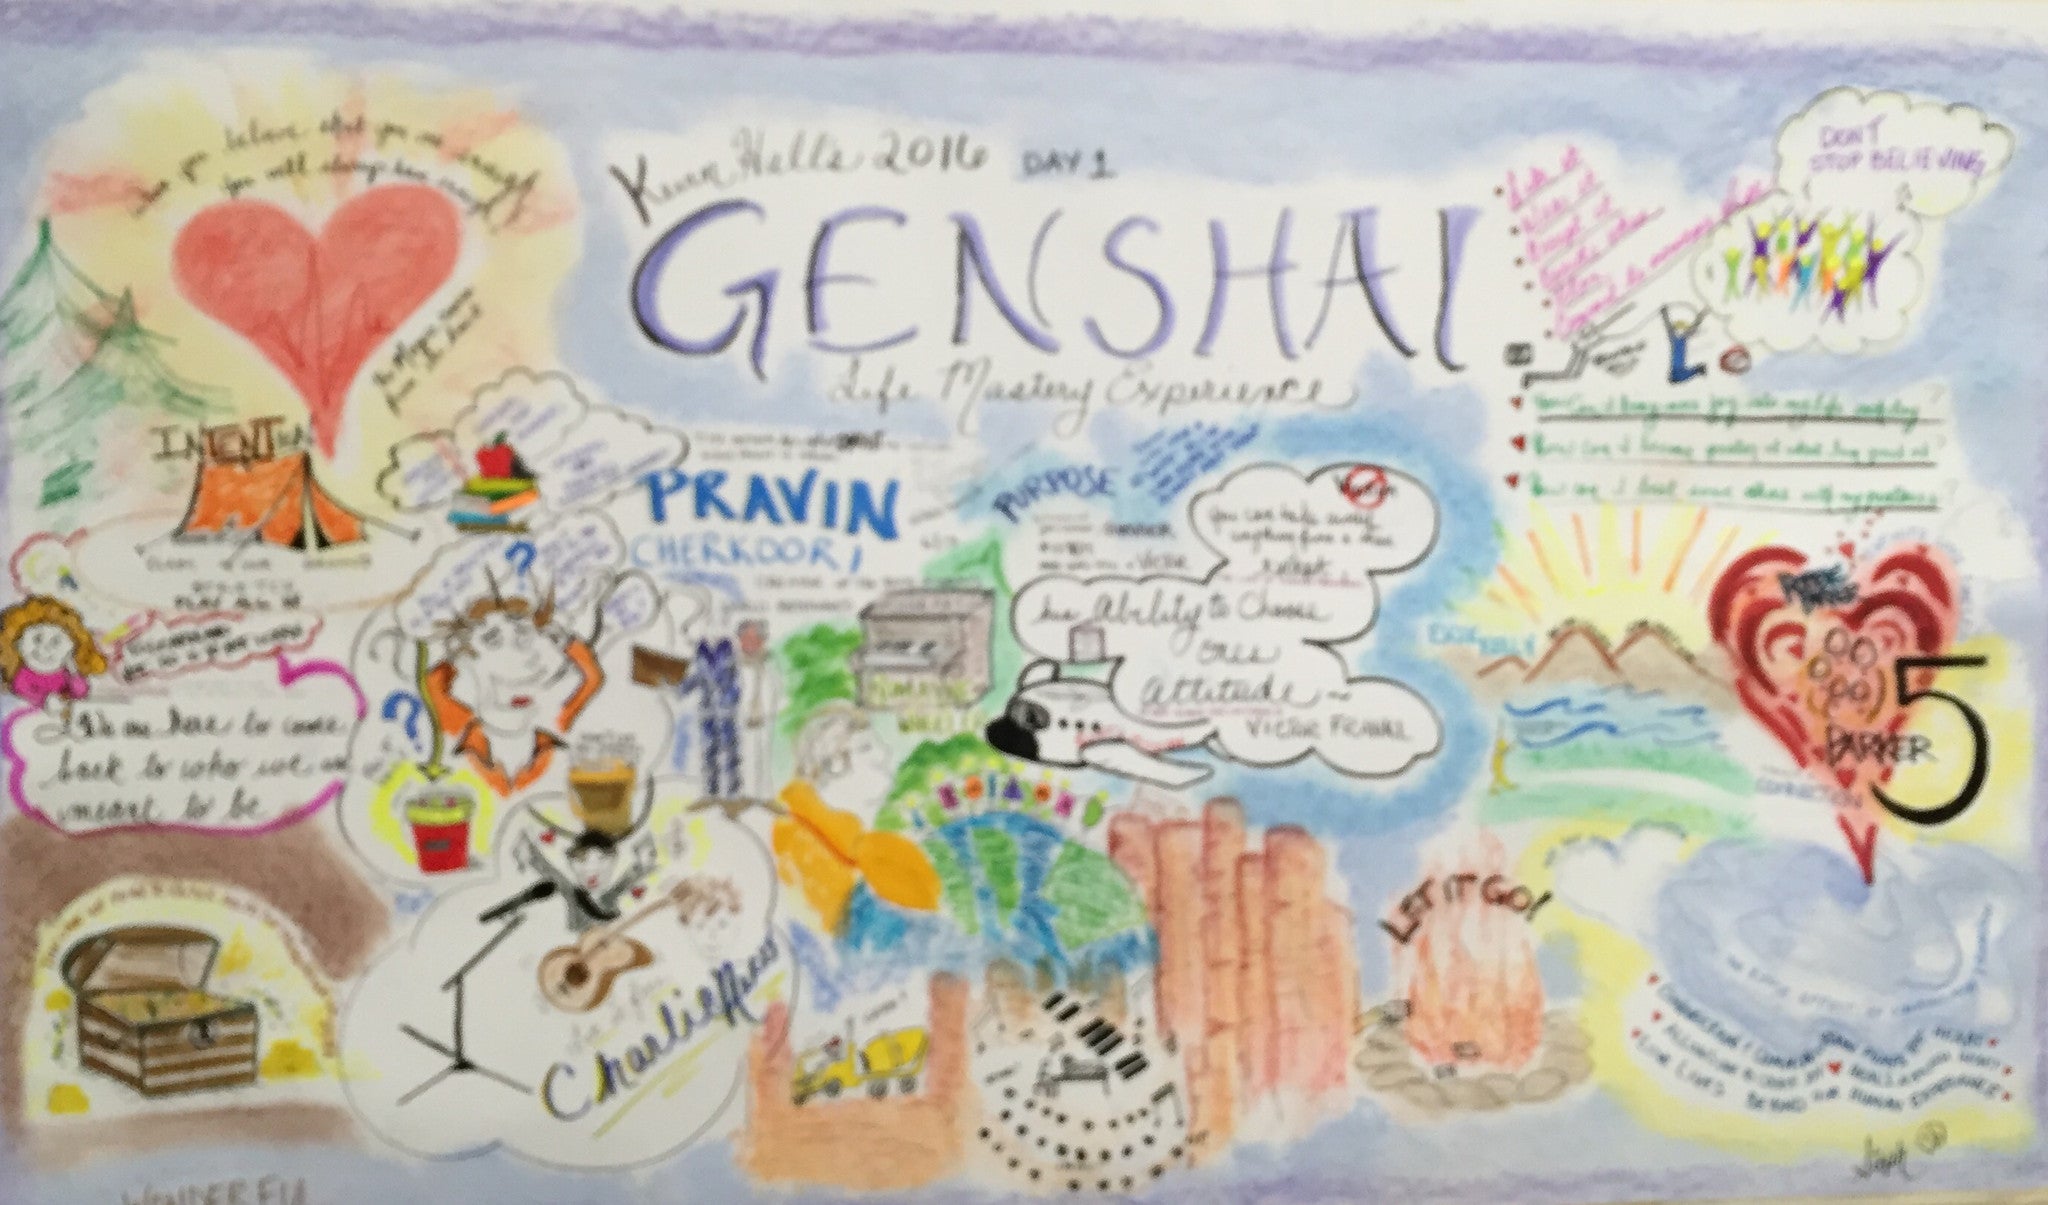 Genshai Life Mastery